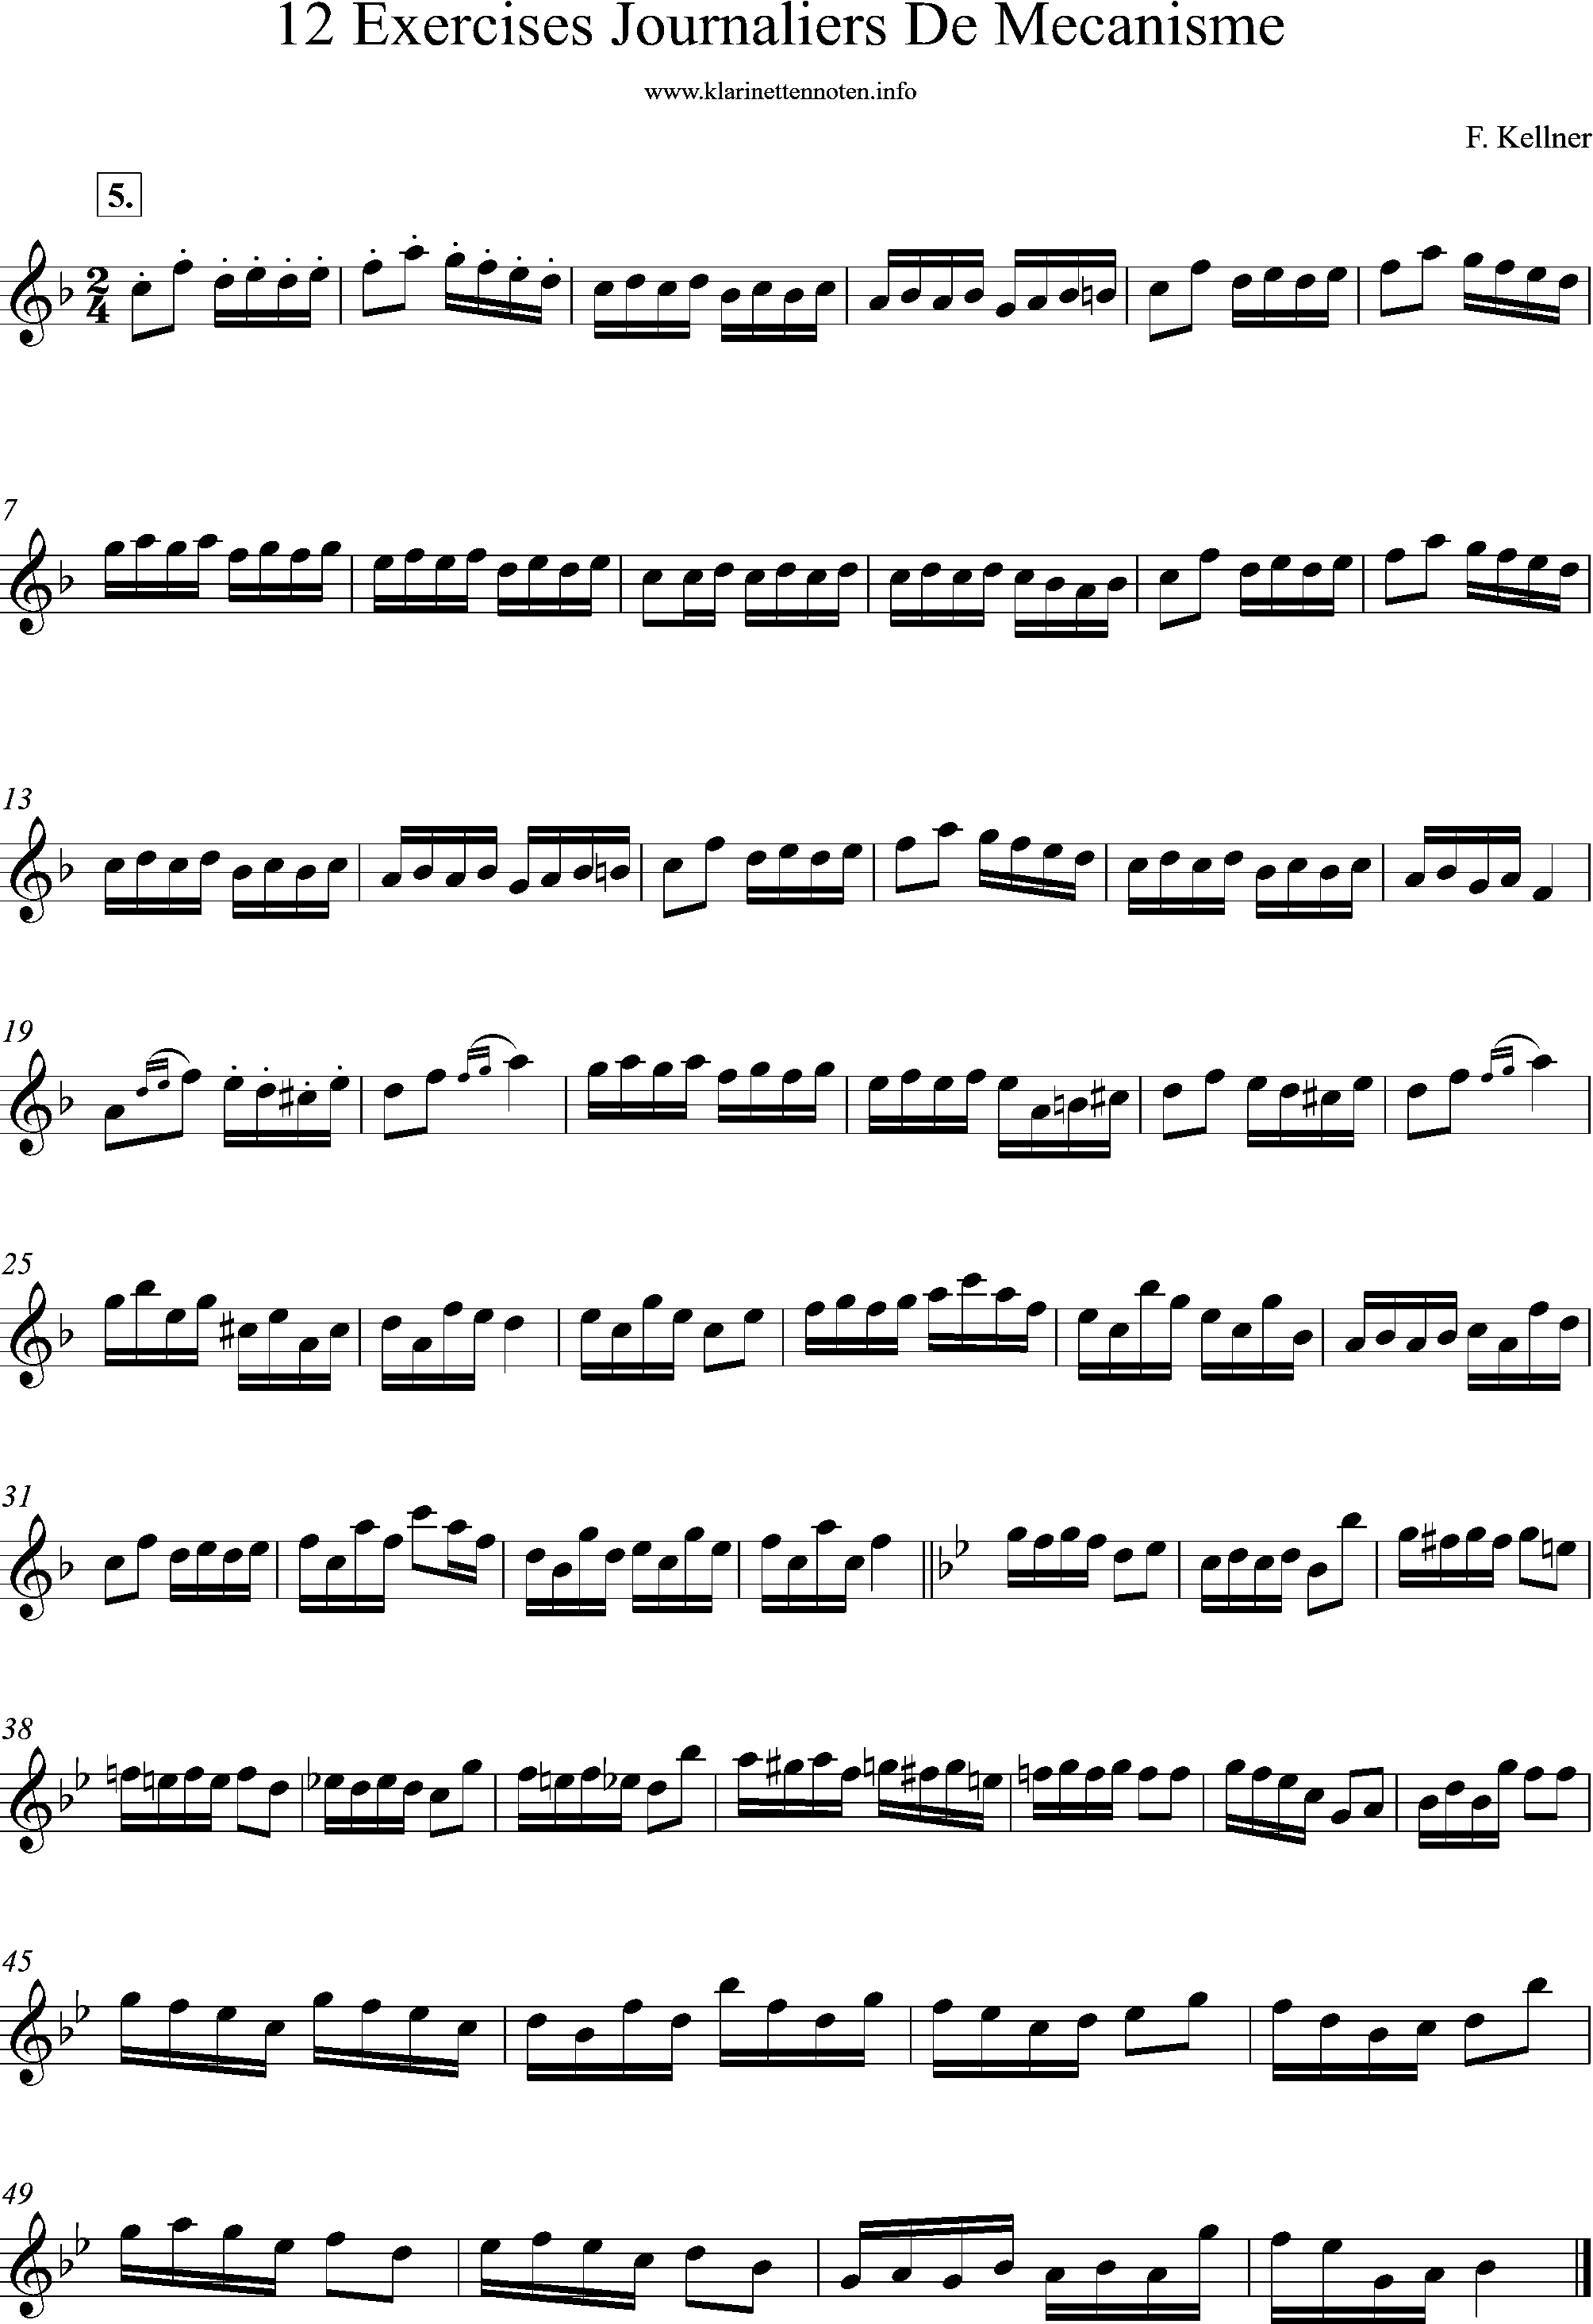 kellner, 12 exercises- No. 2